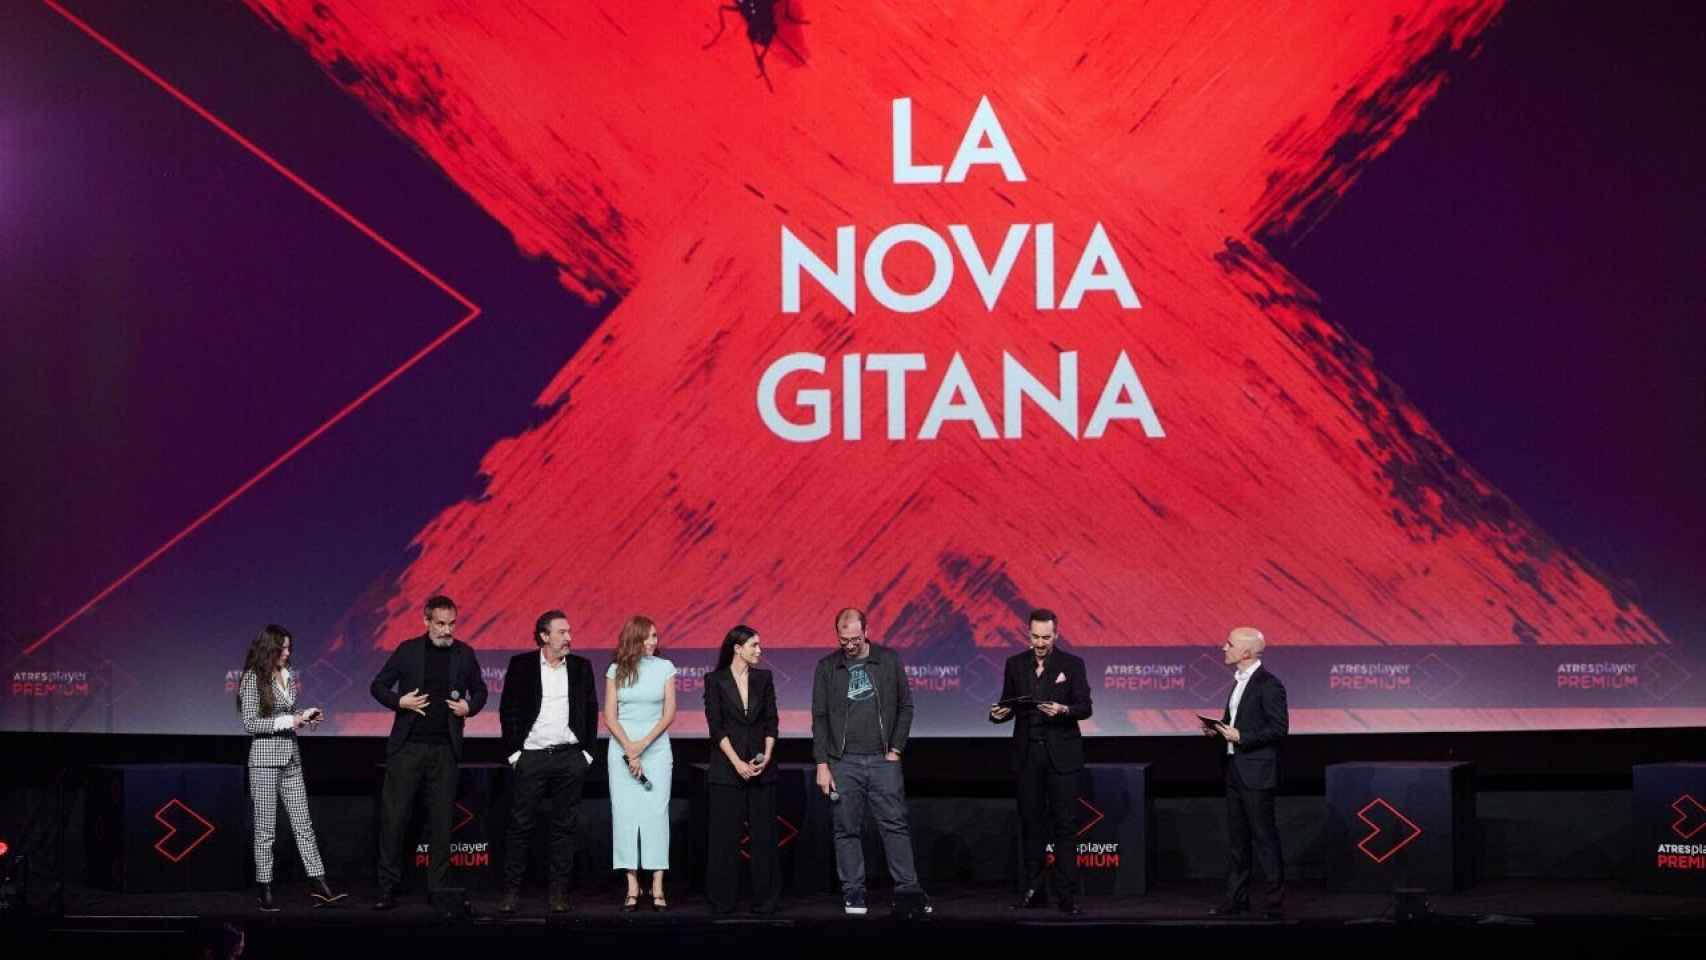 La presentación de la serie 'La novia gitana' en un evento de la plataforma.